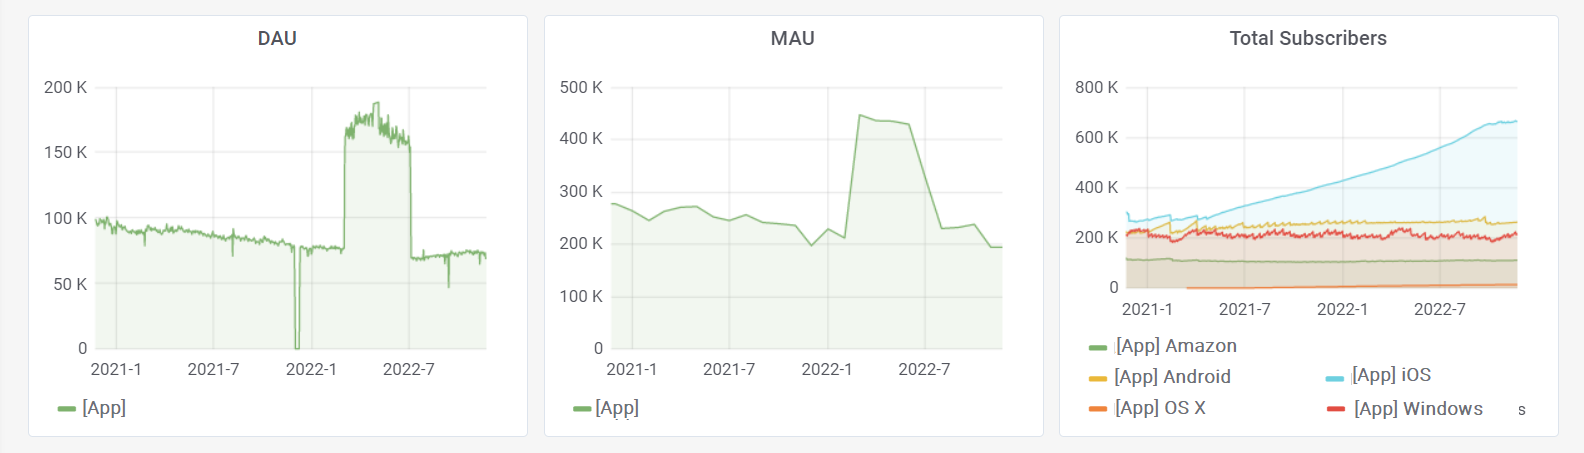 DAU - MAU - Total Subscribers - Statistics in Pushwoosh